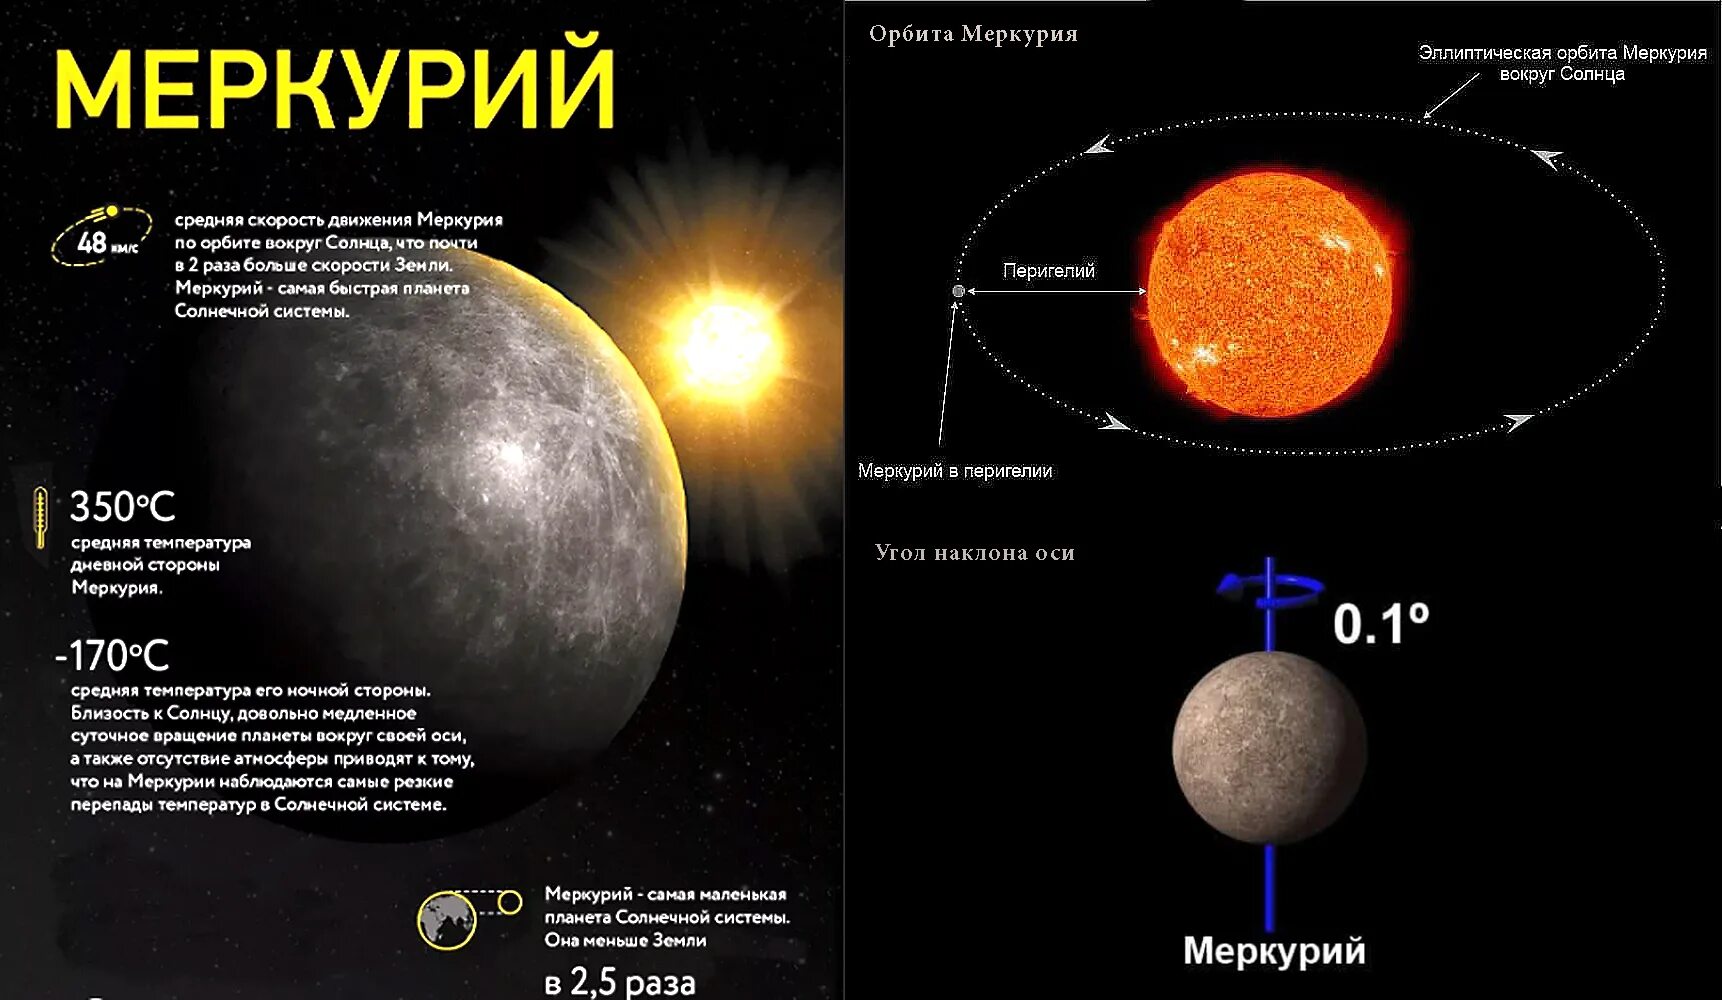 Направление вращения Меркурия. Меркурий Орбита вокруг солнца. Меркурий Планета угол наклона оси. Угол наклона оси вращения Меркурия.